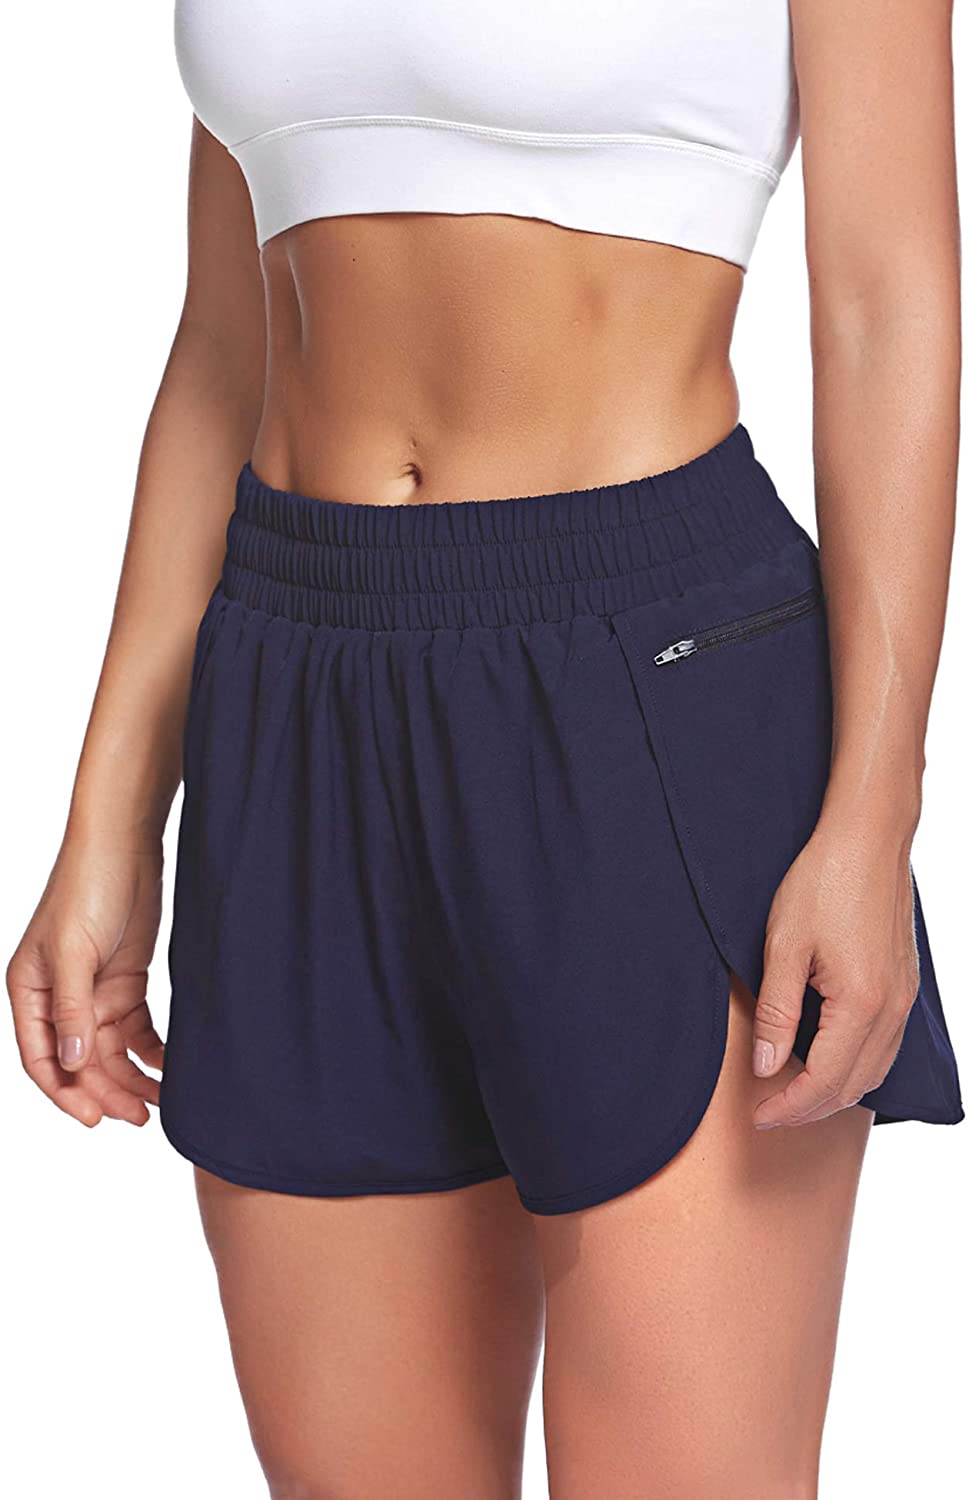 LaLaLa Womens Workout Shorts with Zip Pocket Quick-Dry Athletic Shorts  Sports El | eBay